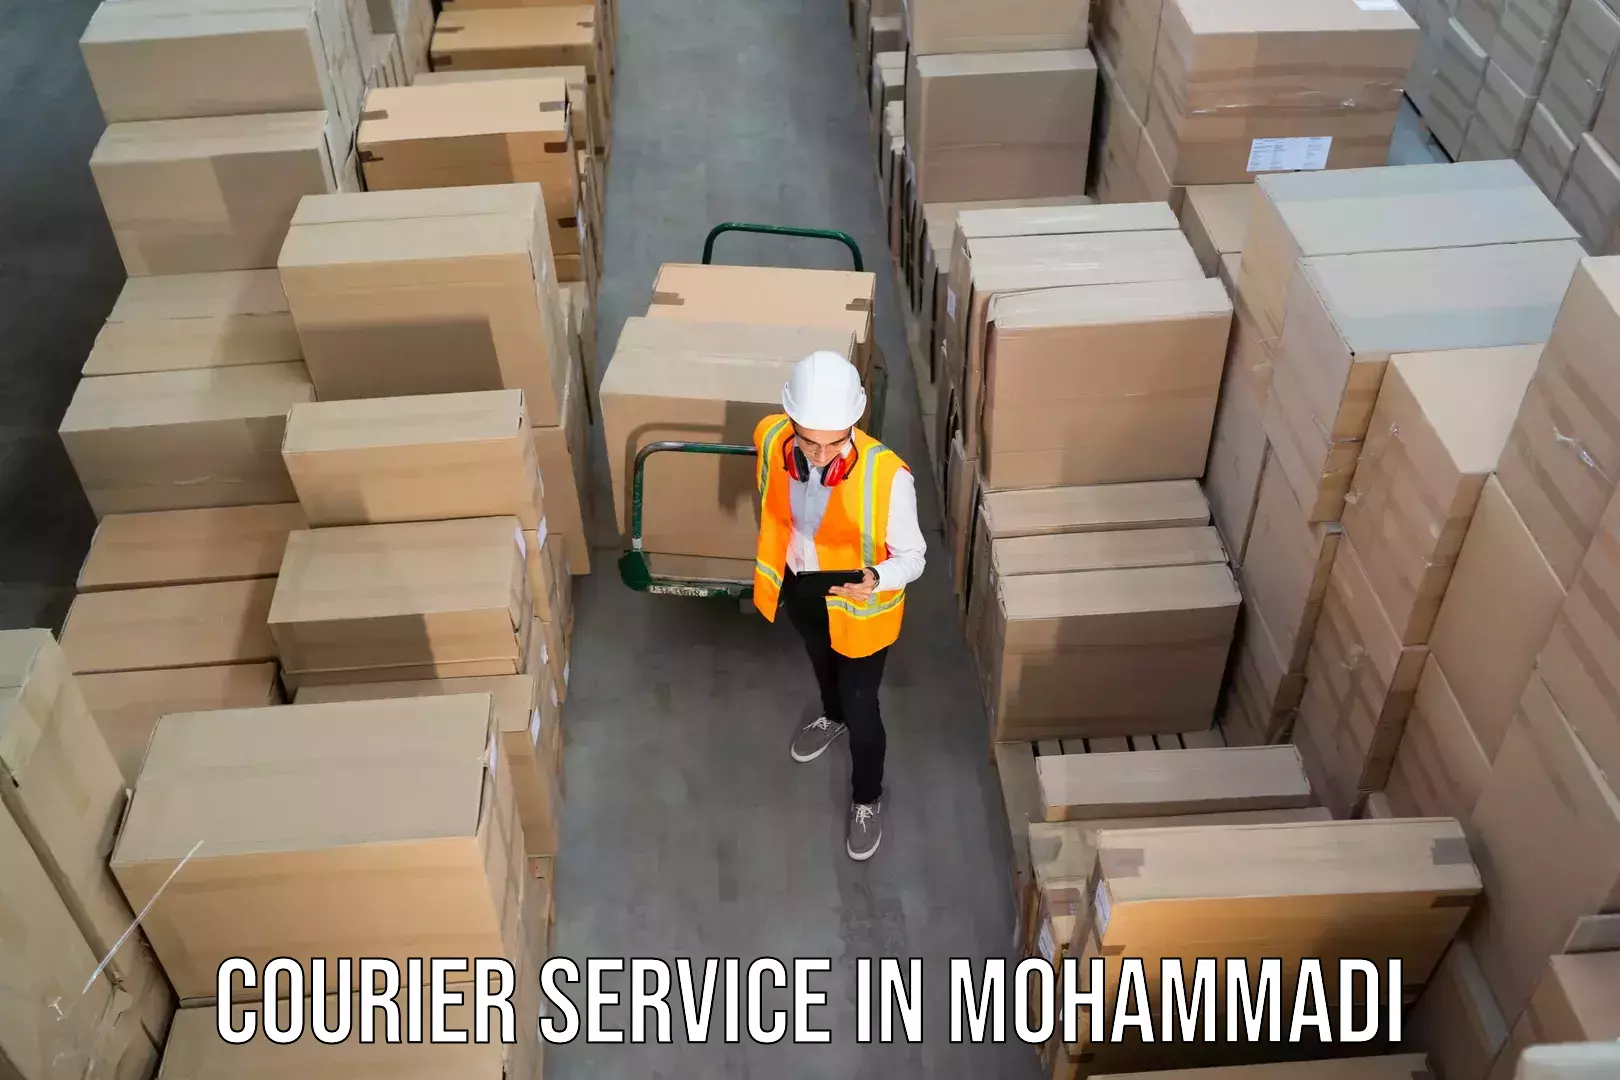 Quick parcel dispatch in Mohammadi